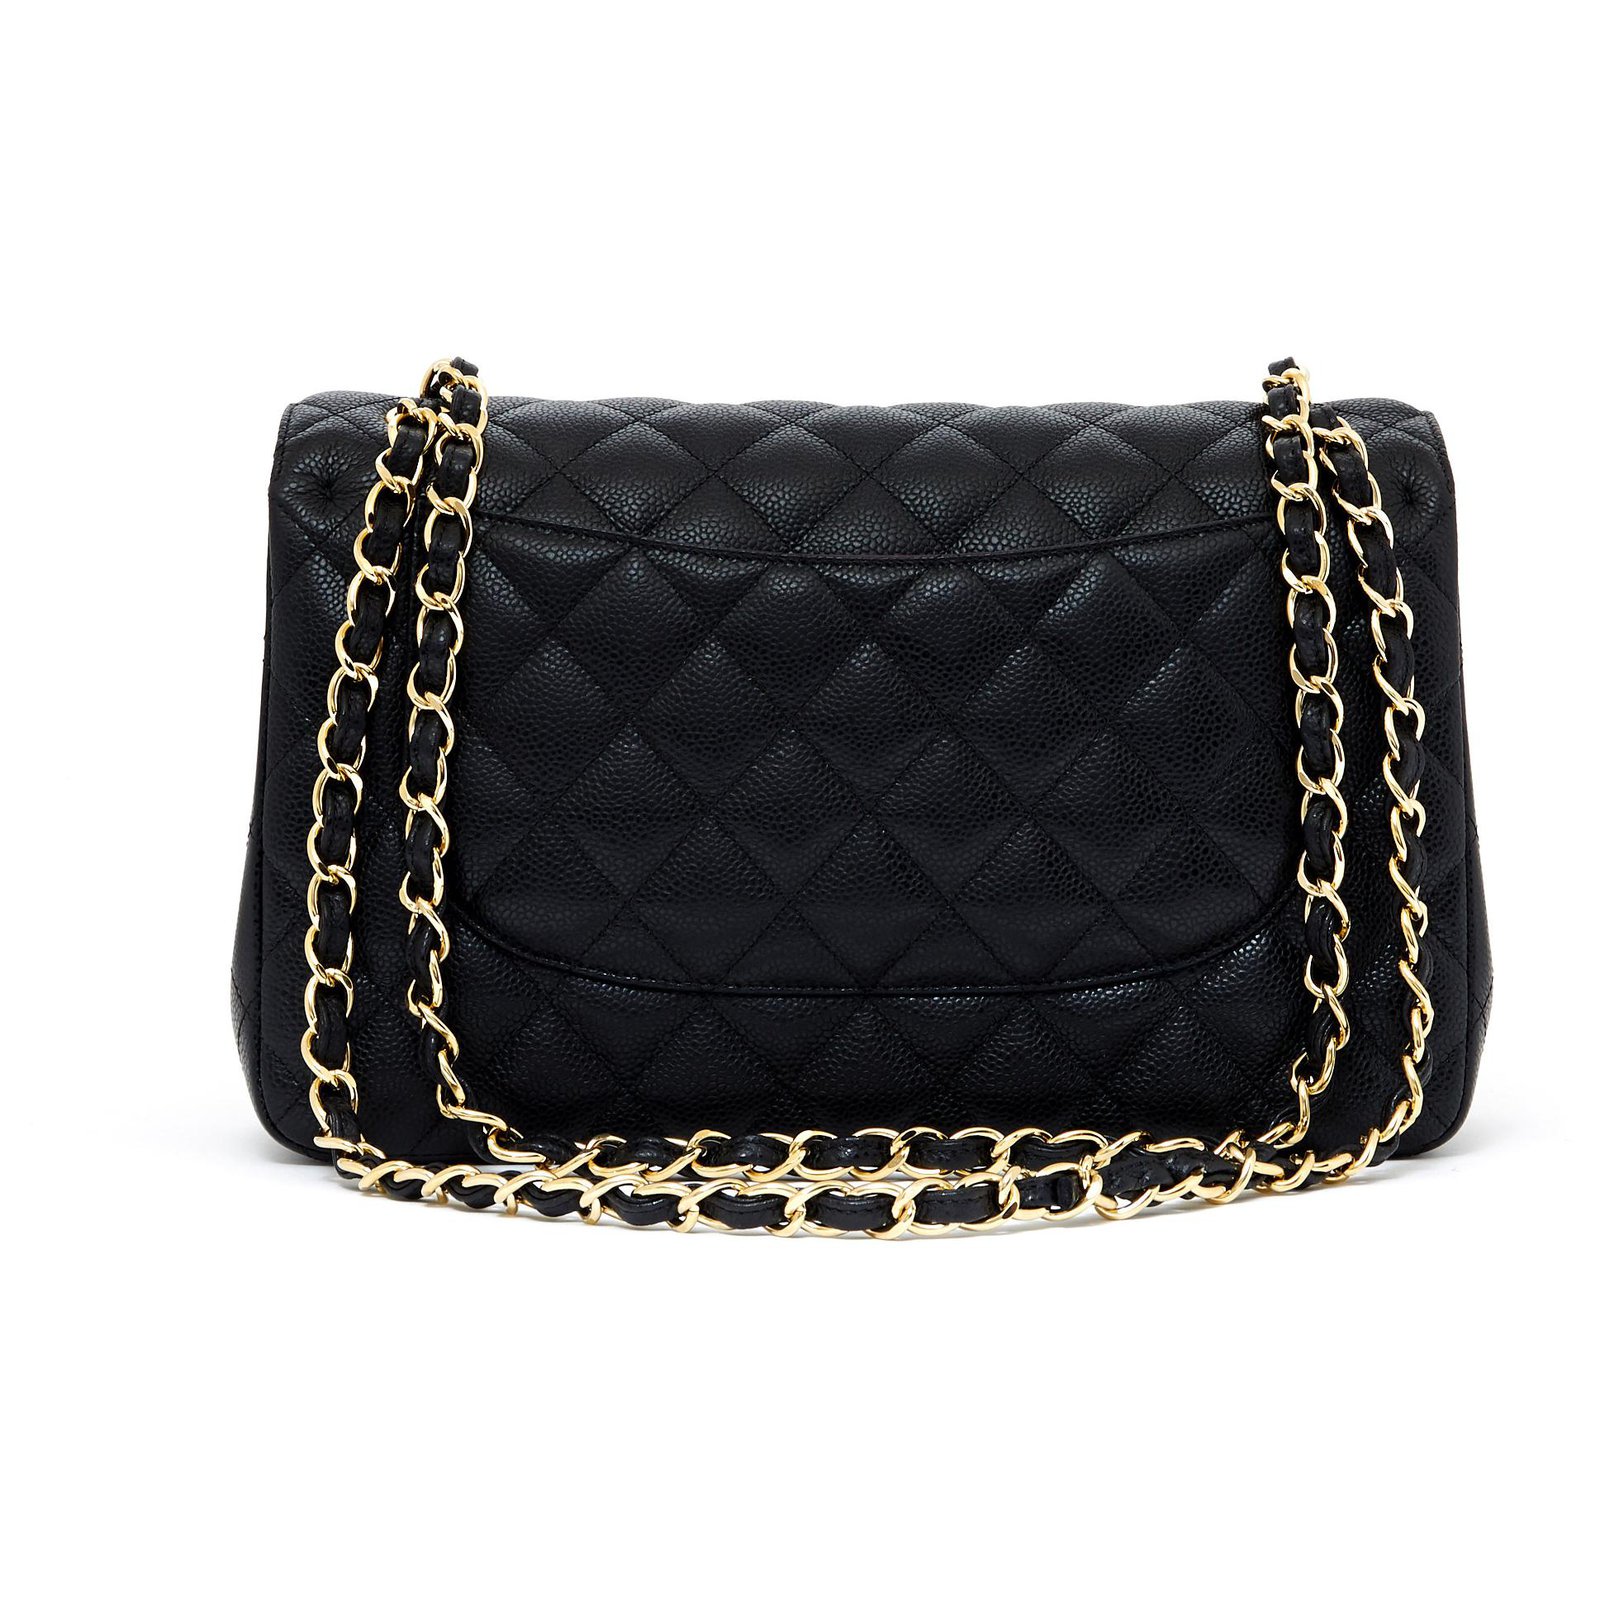 Chanel Large Classic Bag 30 Timeless black caviar gold Handbags Leather,Metal Black,Golden ref ...